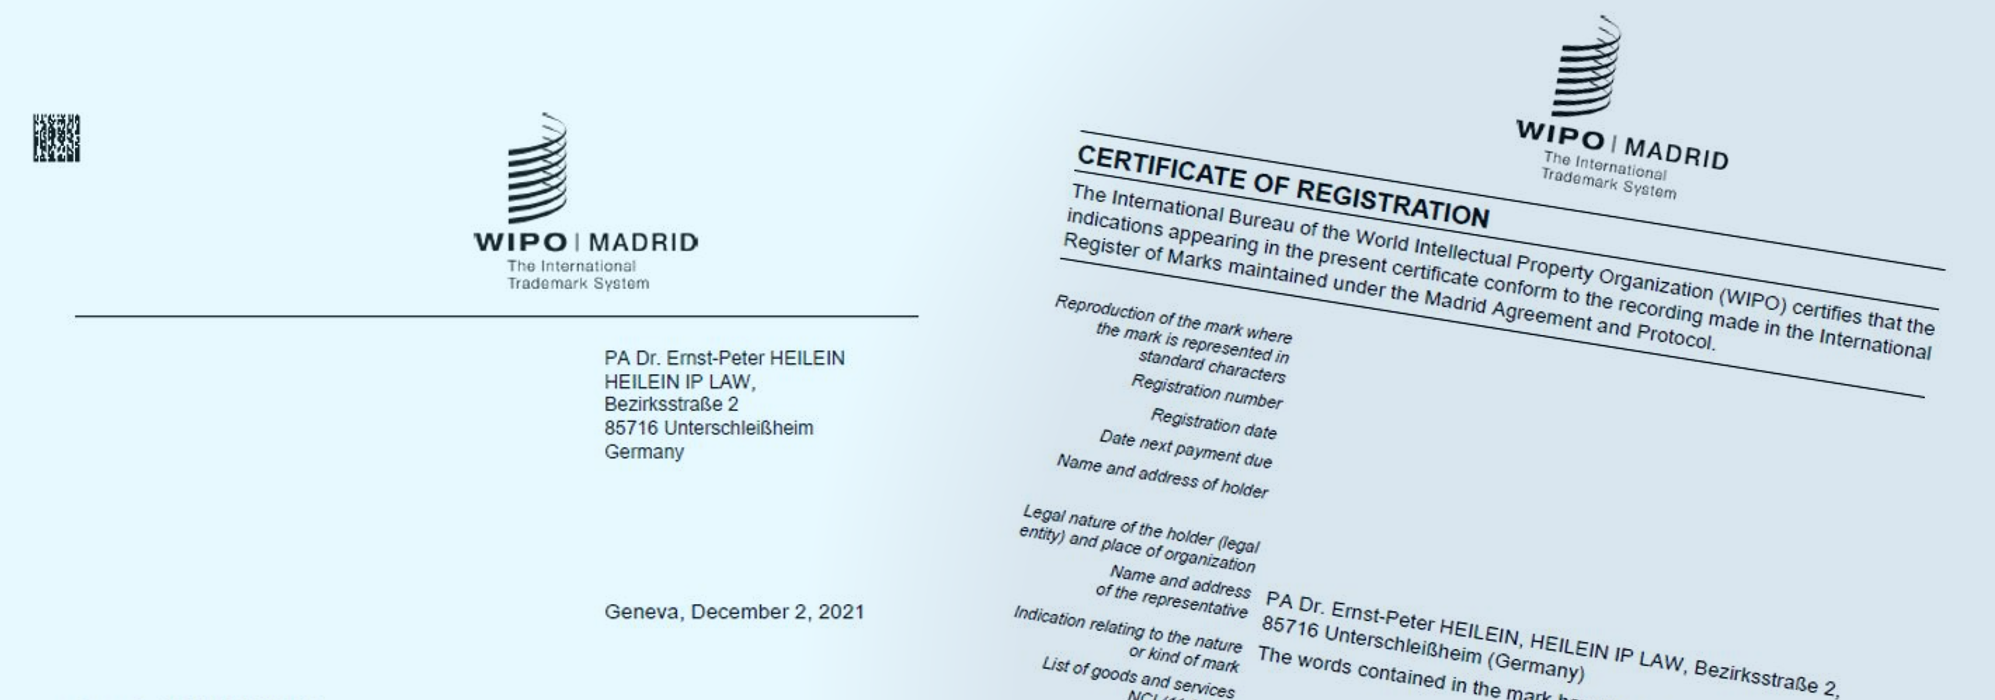 International Trade Mark Certificate